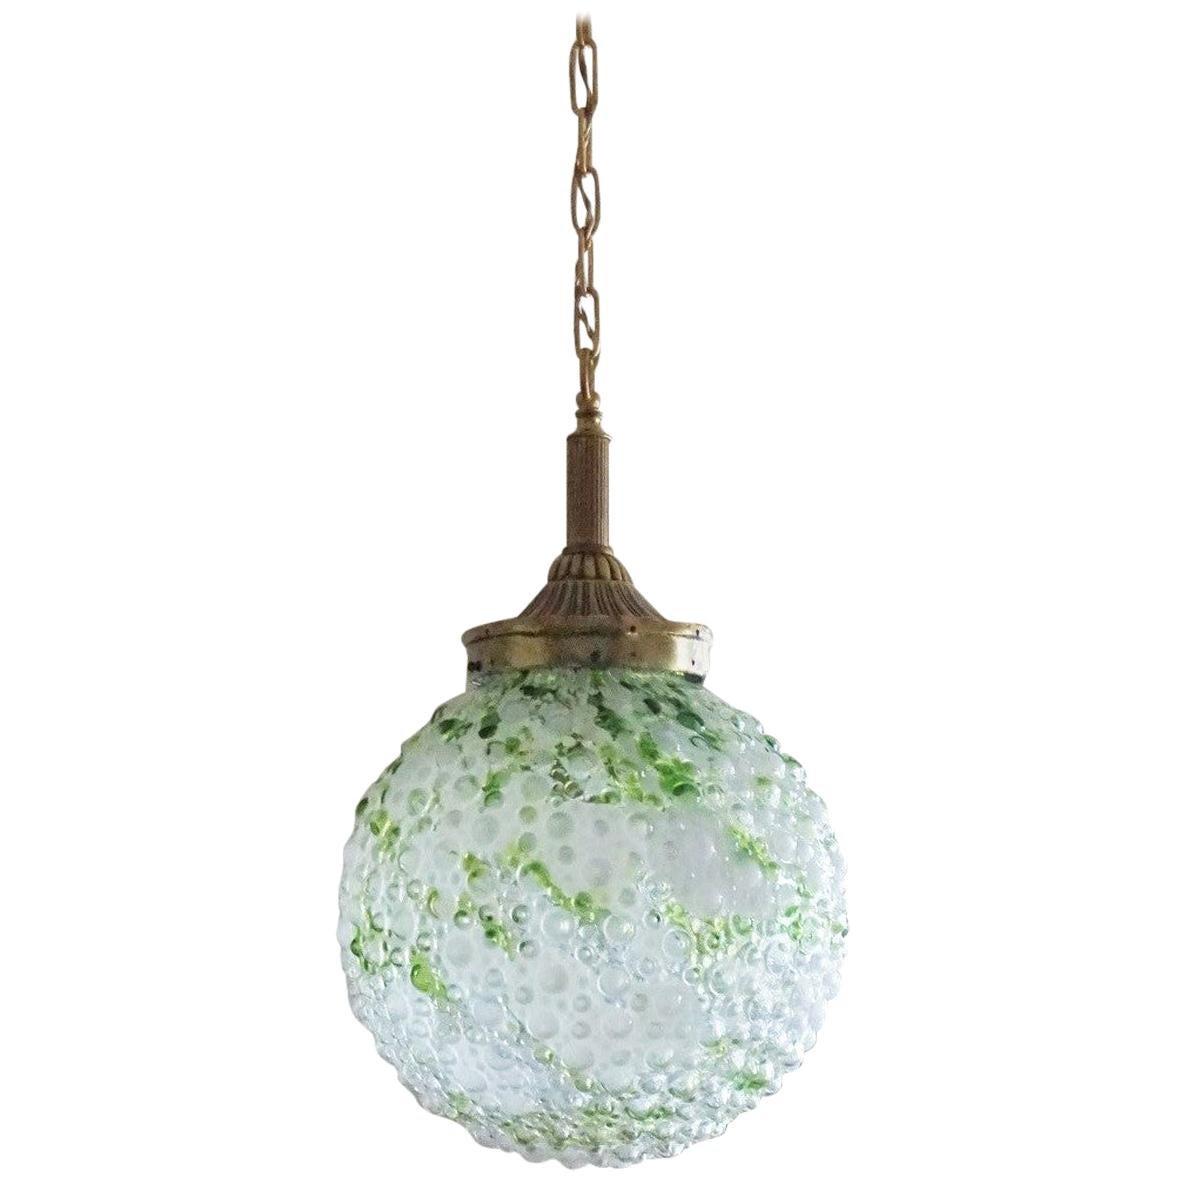 Midcentury Murano White and Green Glass Ball Pendant, Italy, 1950-1959